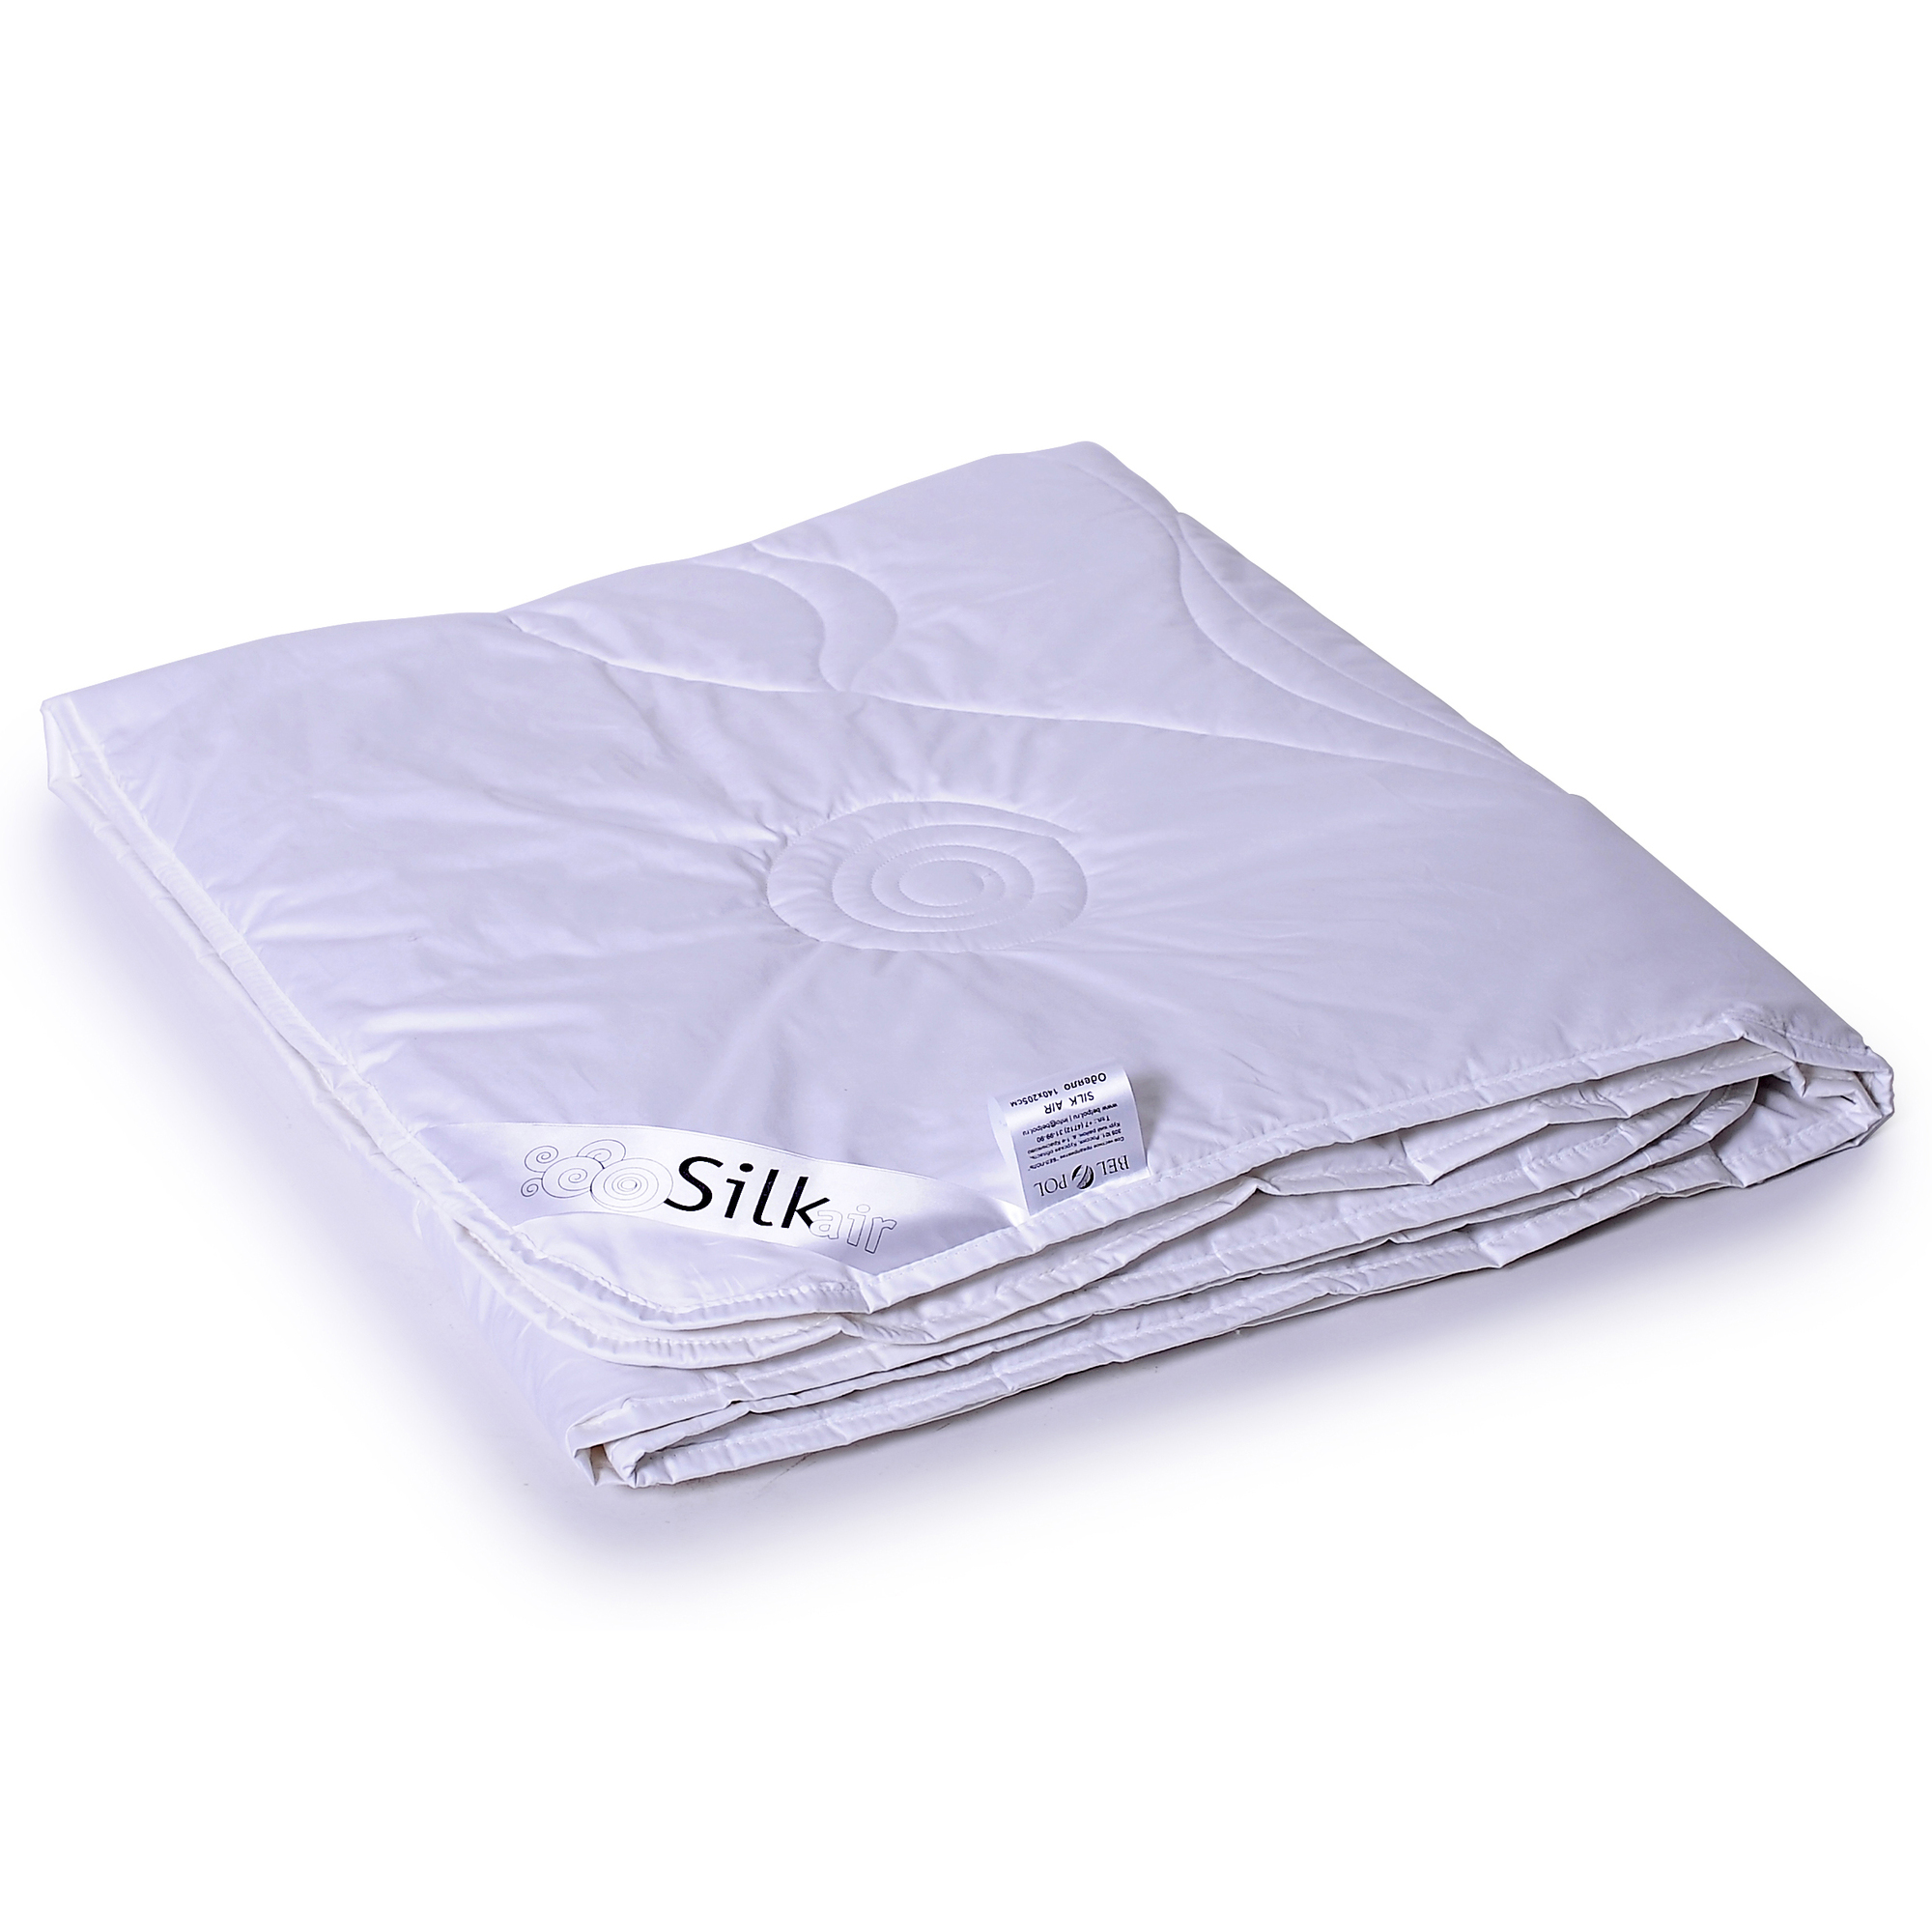 Одеяло Silk Air Всесезонное (140х205 см), размер 140х205 см bp645822 Одеяло Silk Air Всесезонное (140х205 см) - фото 1